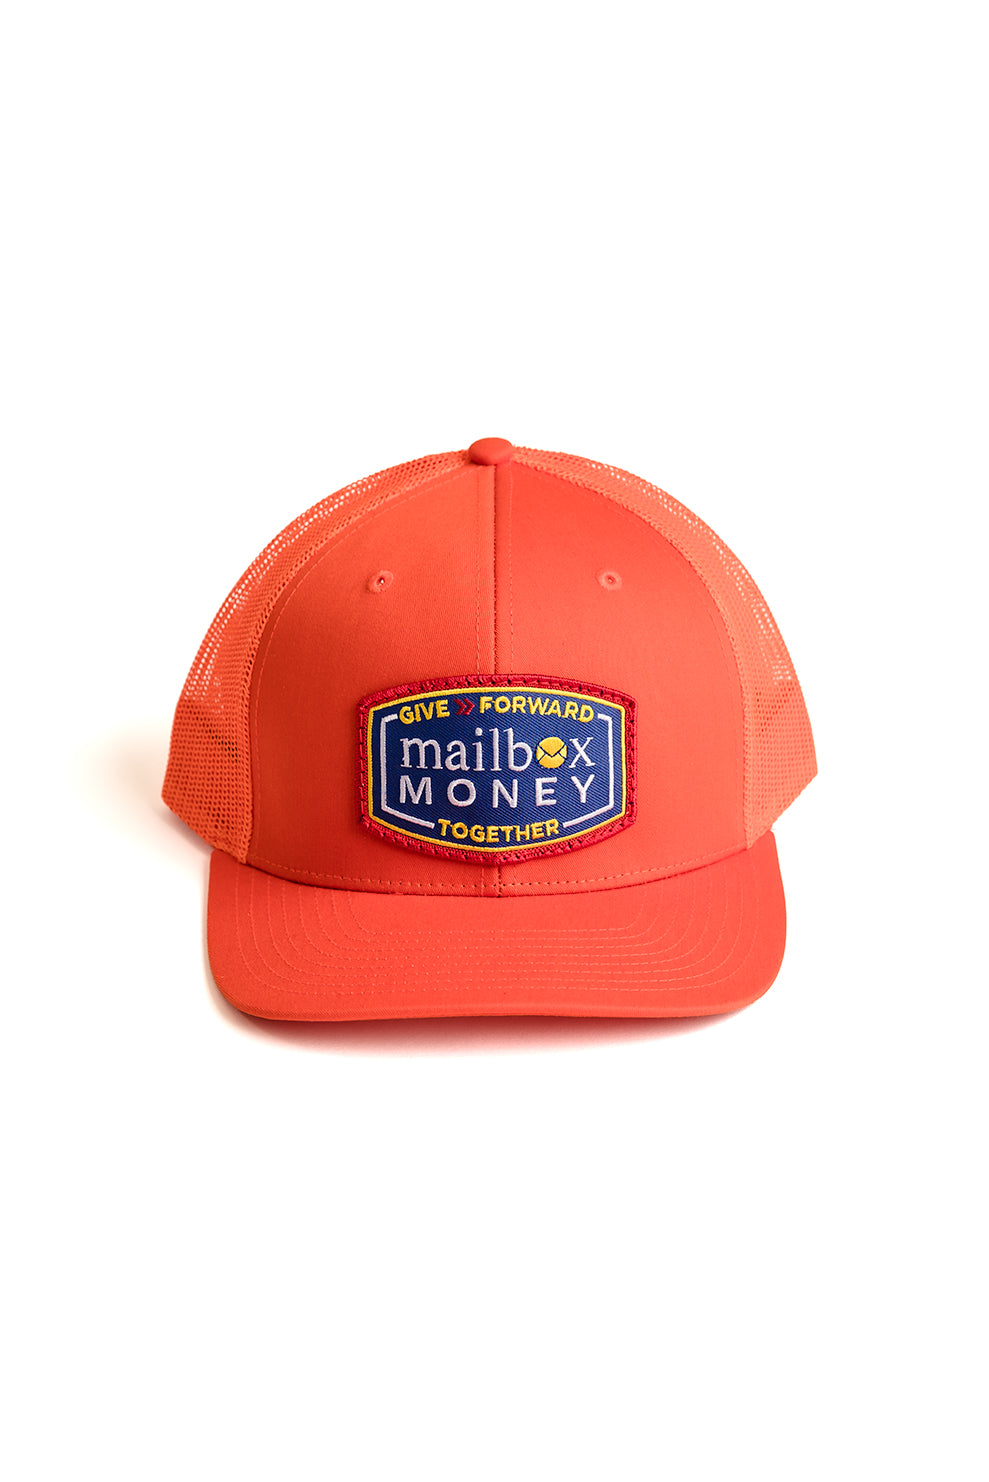 Easy Rider Trucker Hat (Orange) – Mailbox Money Members Official Store